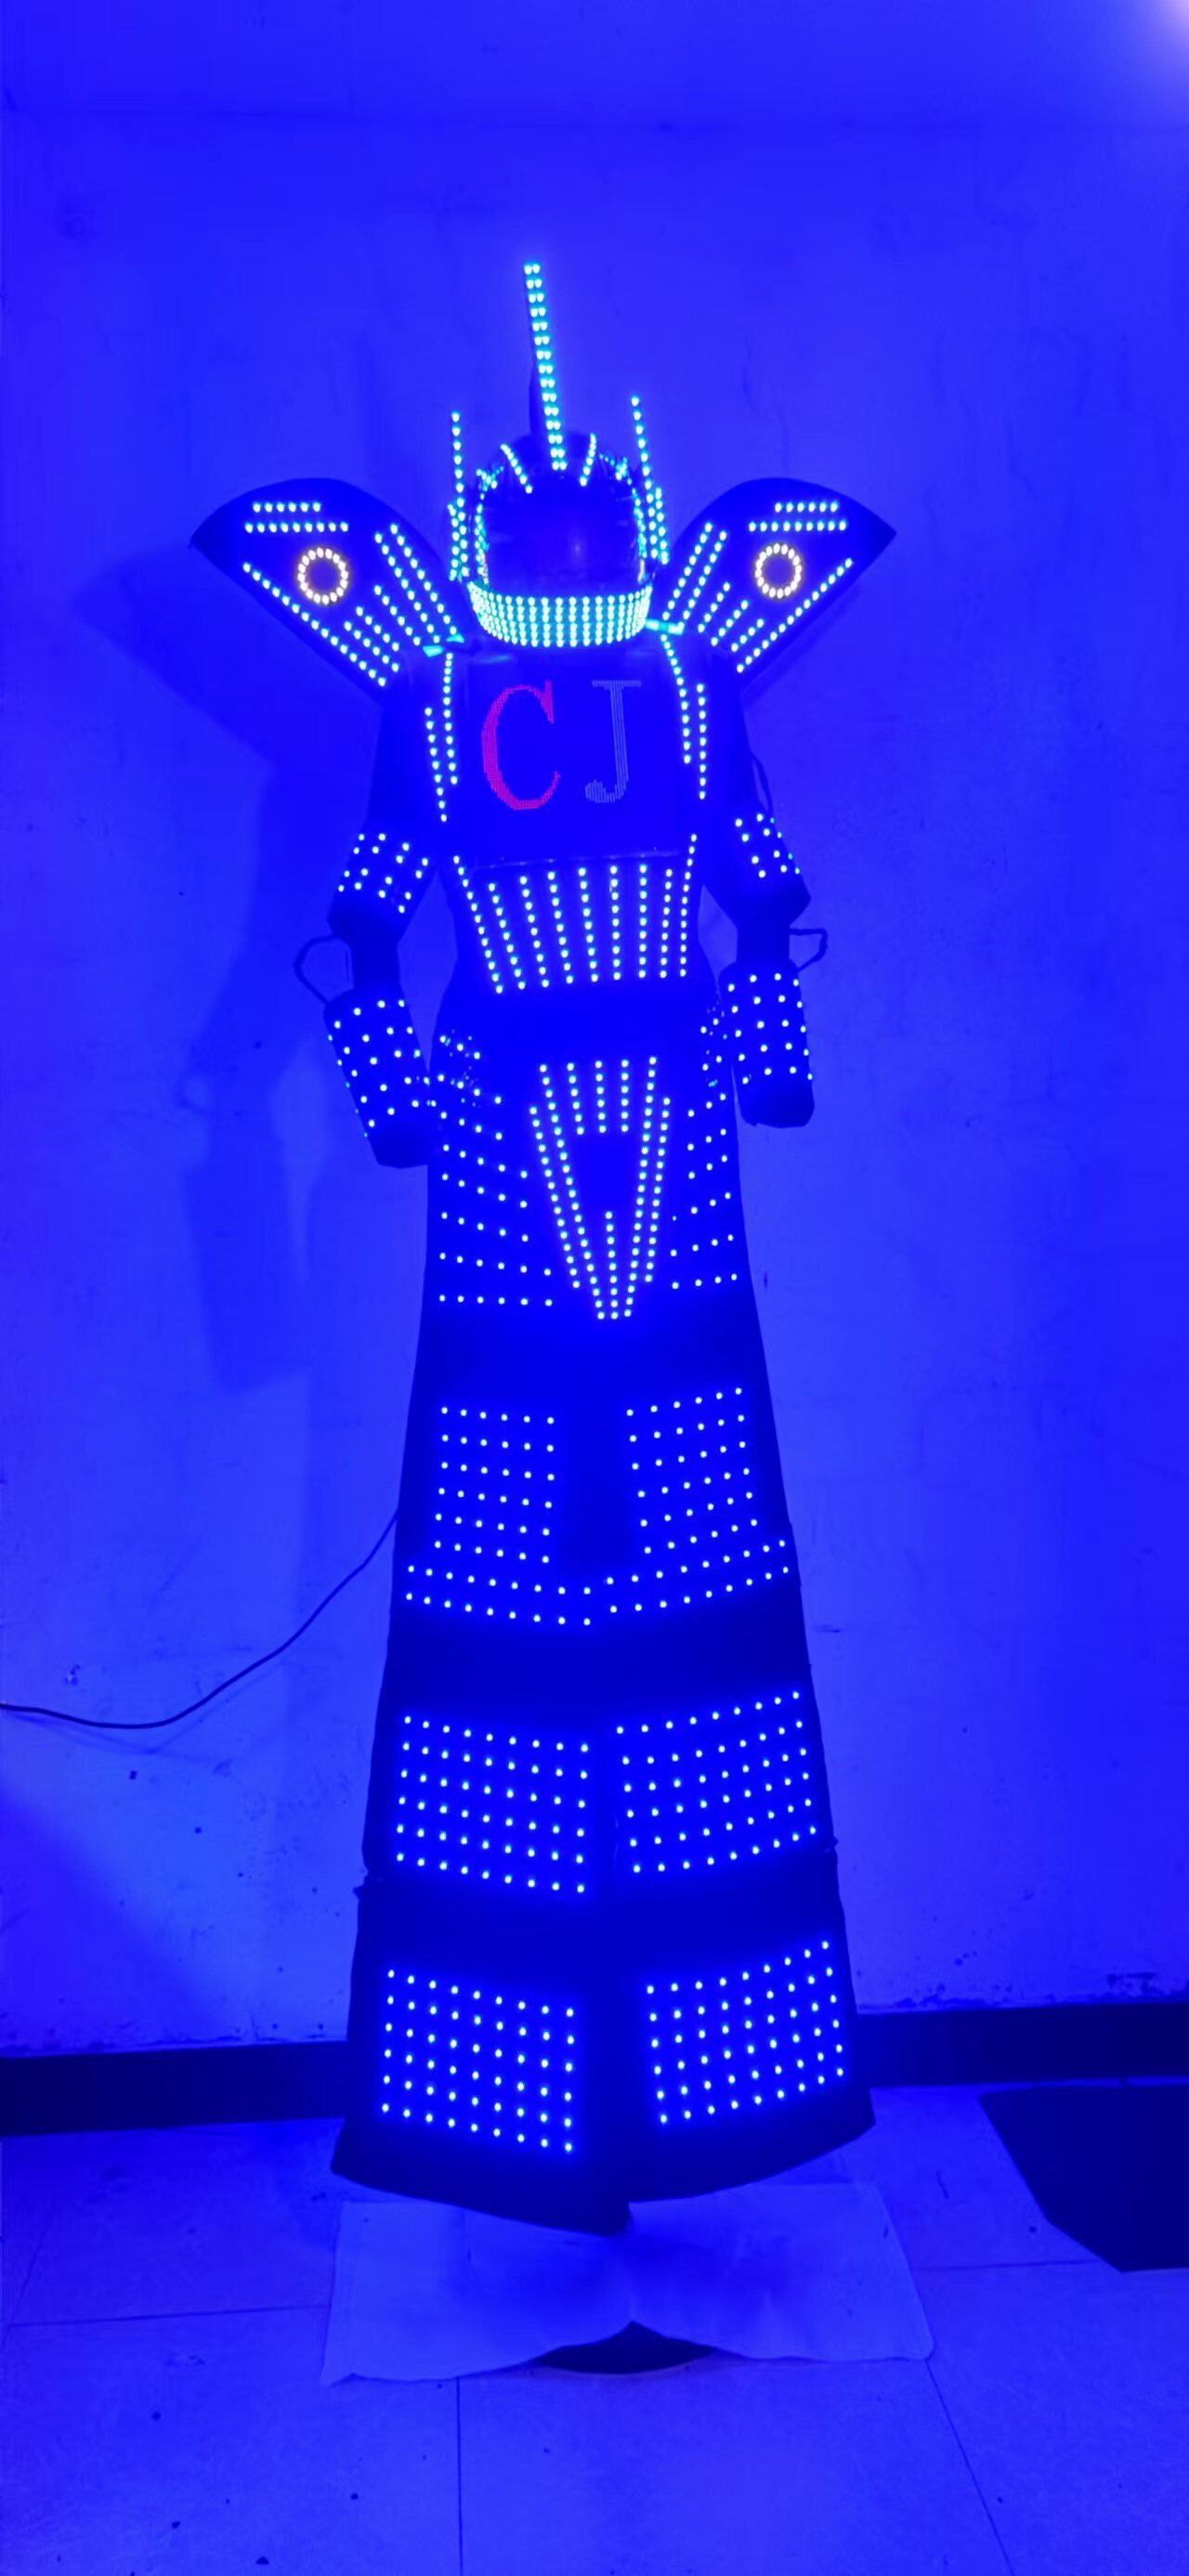 LED Screen Robot Costume